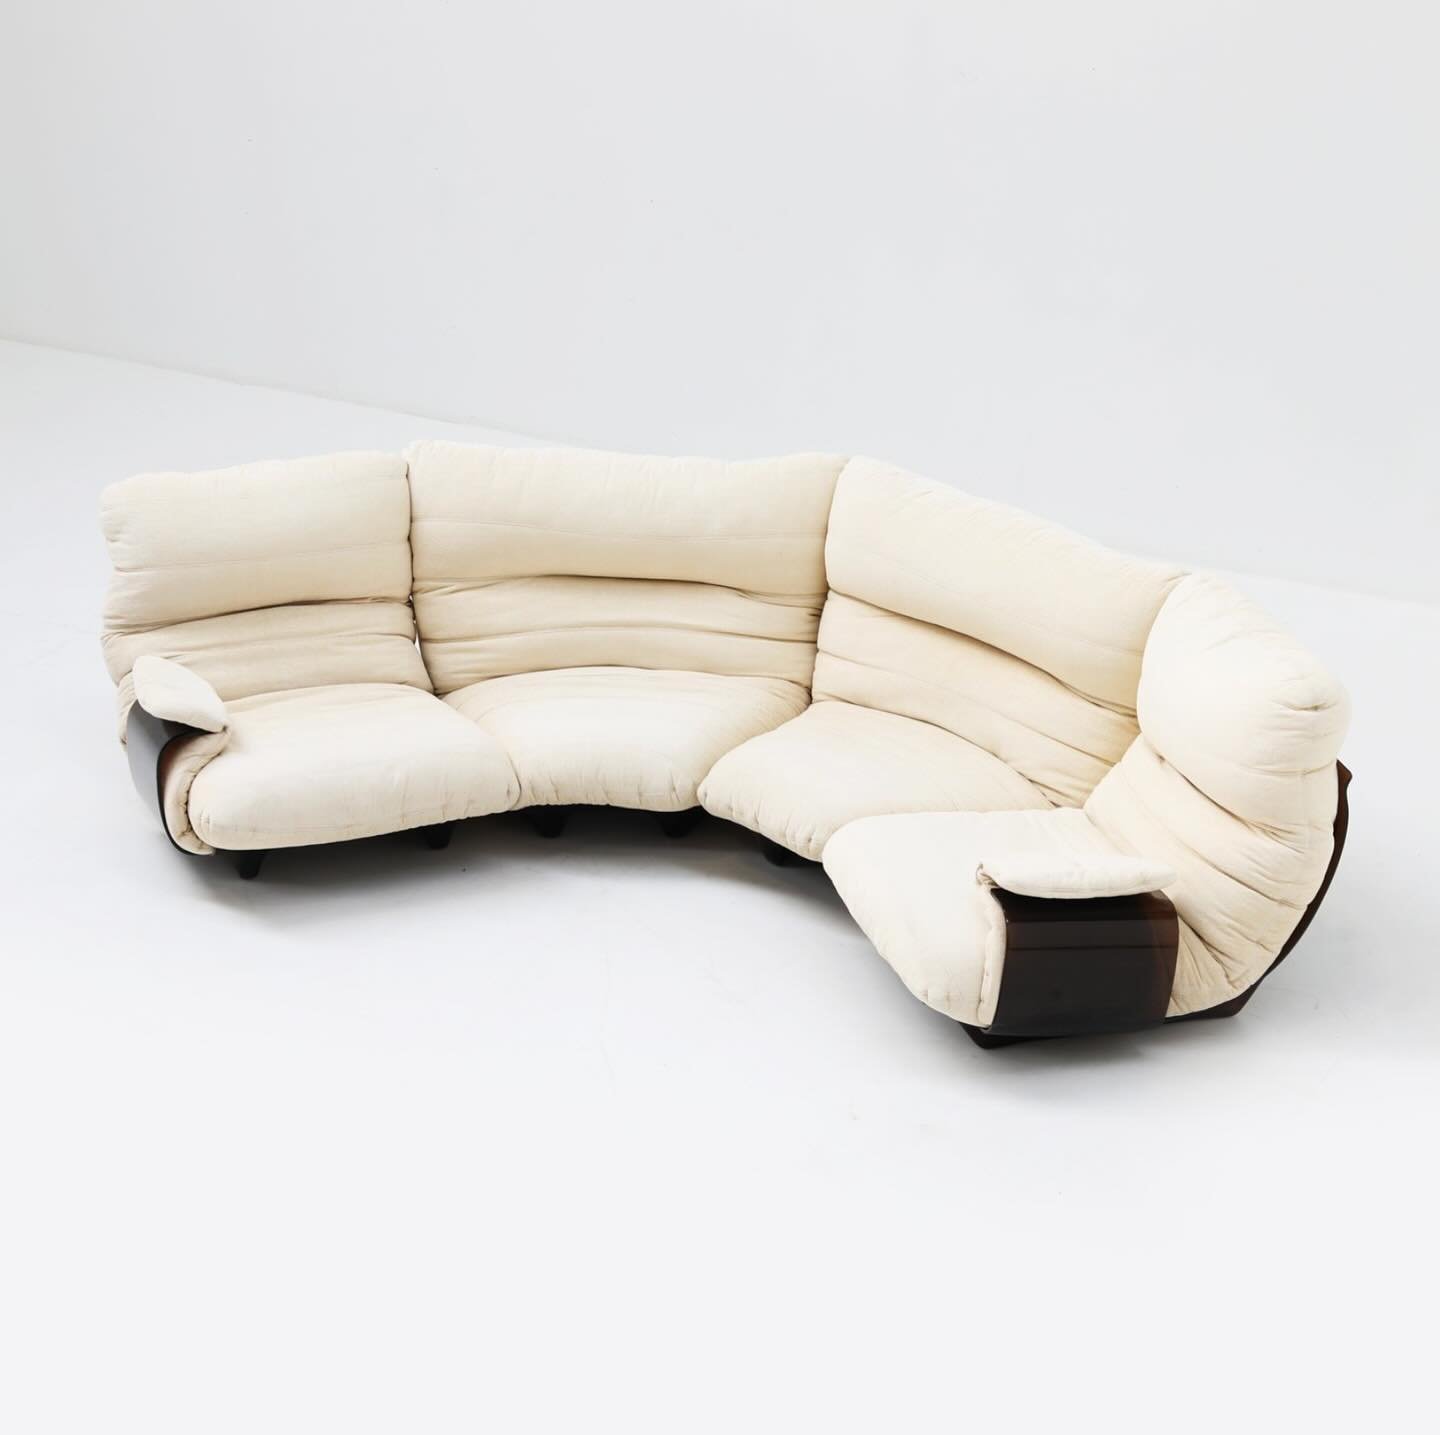 Marsala sofa by Michel Ducaroy, 1970s